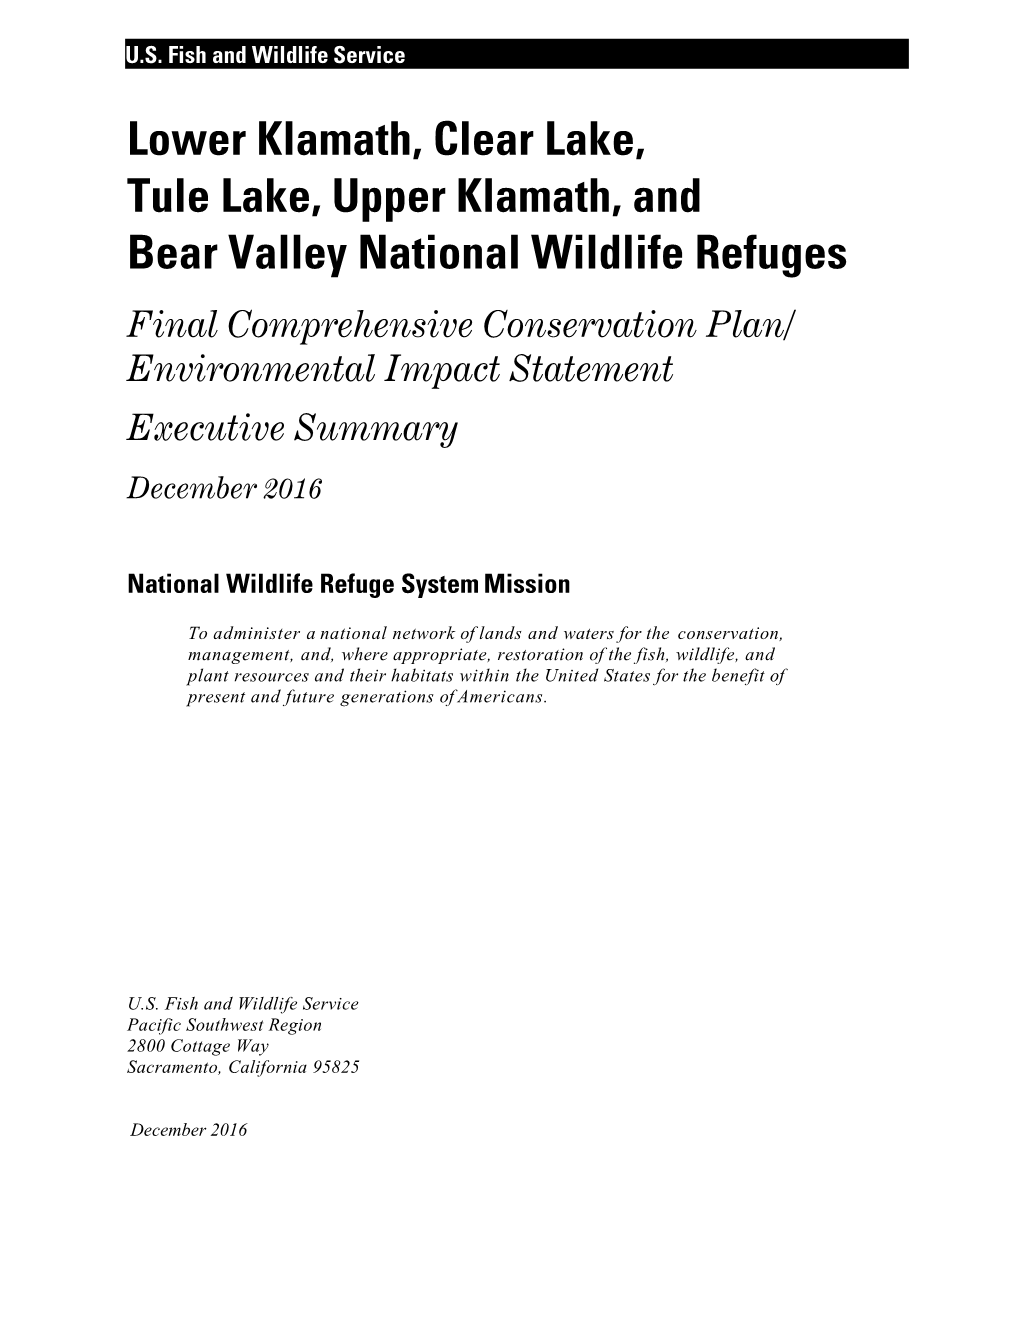 Lower Klamath, Clear Lake, Tule Lake, Upper Klamath, and Bear Valley National Wildlife Refuges